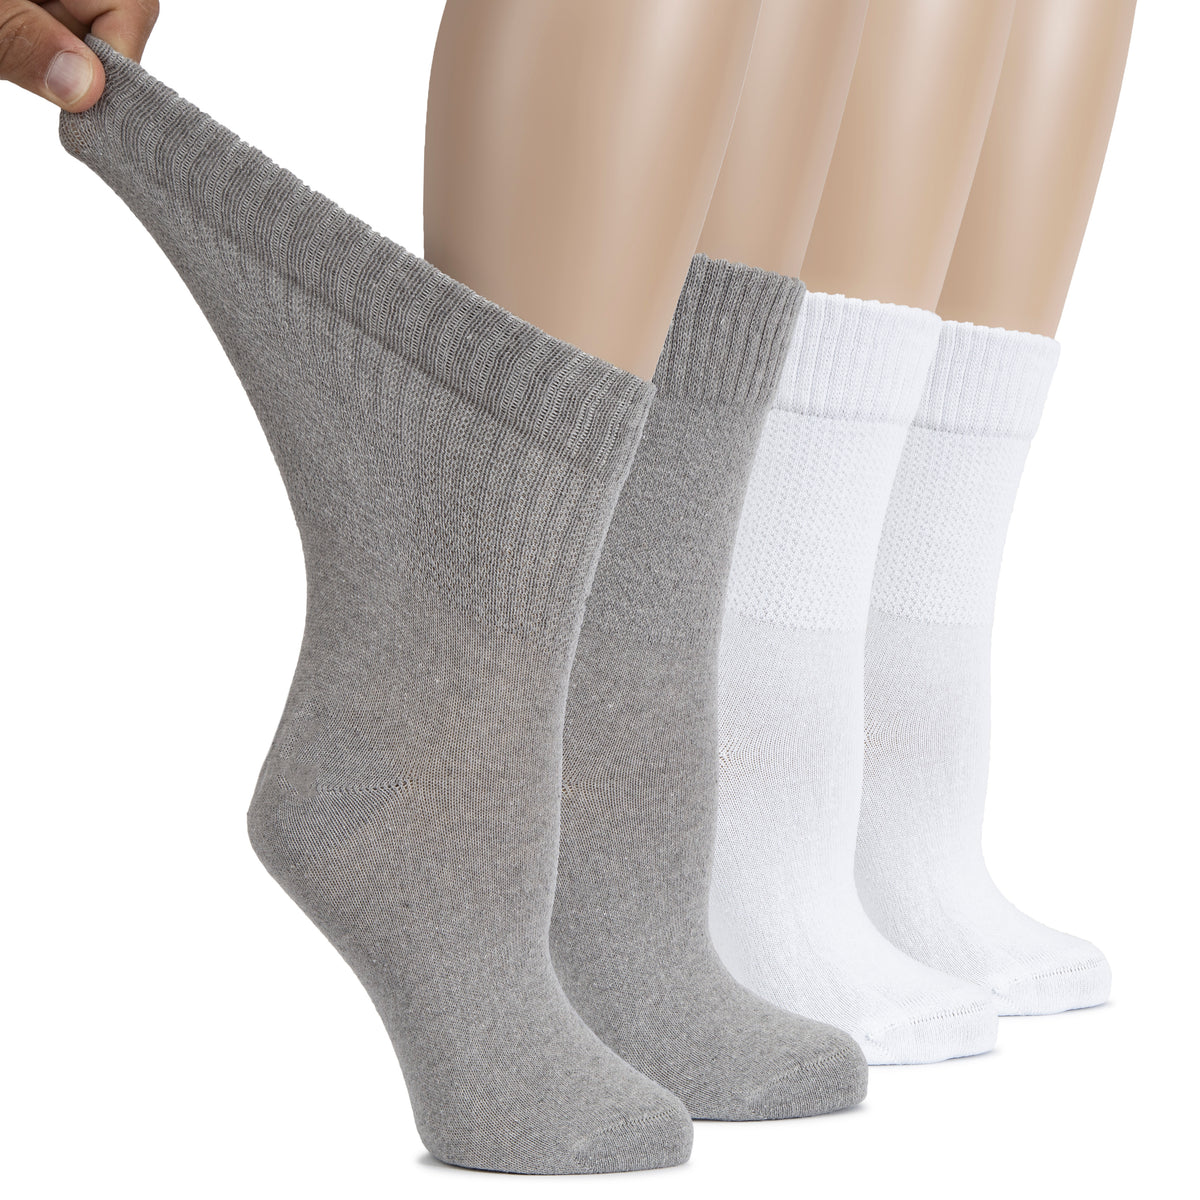 Hugh Ugoli Cotton Diabetic Women's Socks, Crew, Loose, Wide Stretchy, Thin, Seamless Toe and Non-Binding Top, 4 Pairs | Shoe Size: 6-9 | IndigoBlue / LightGrey